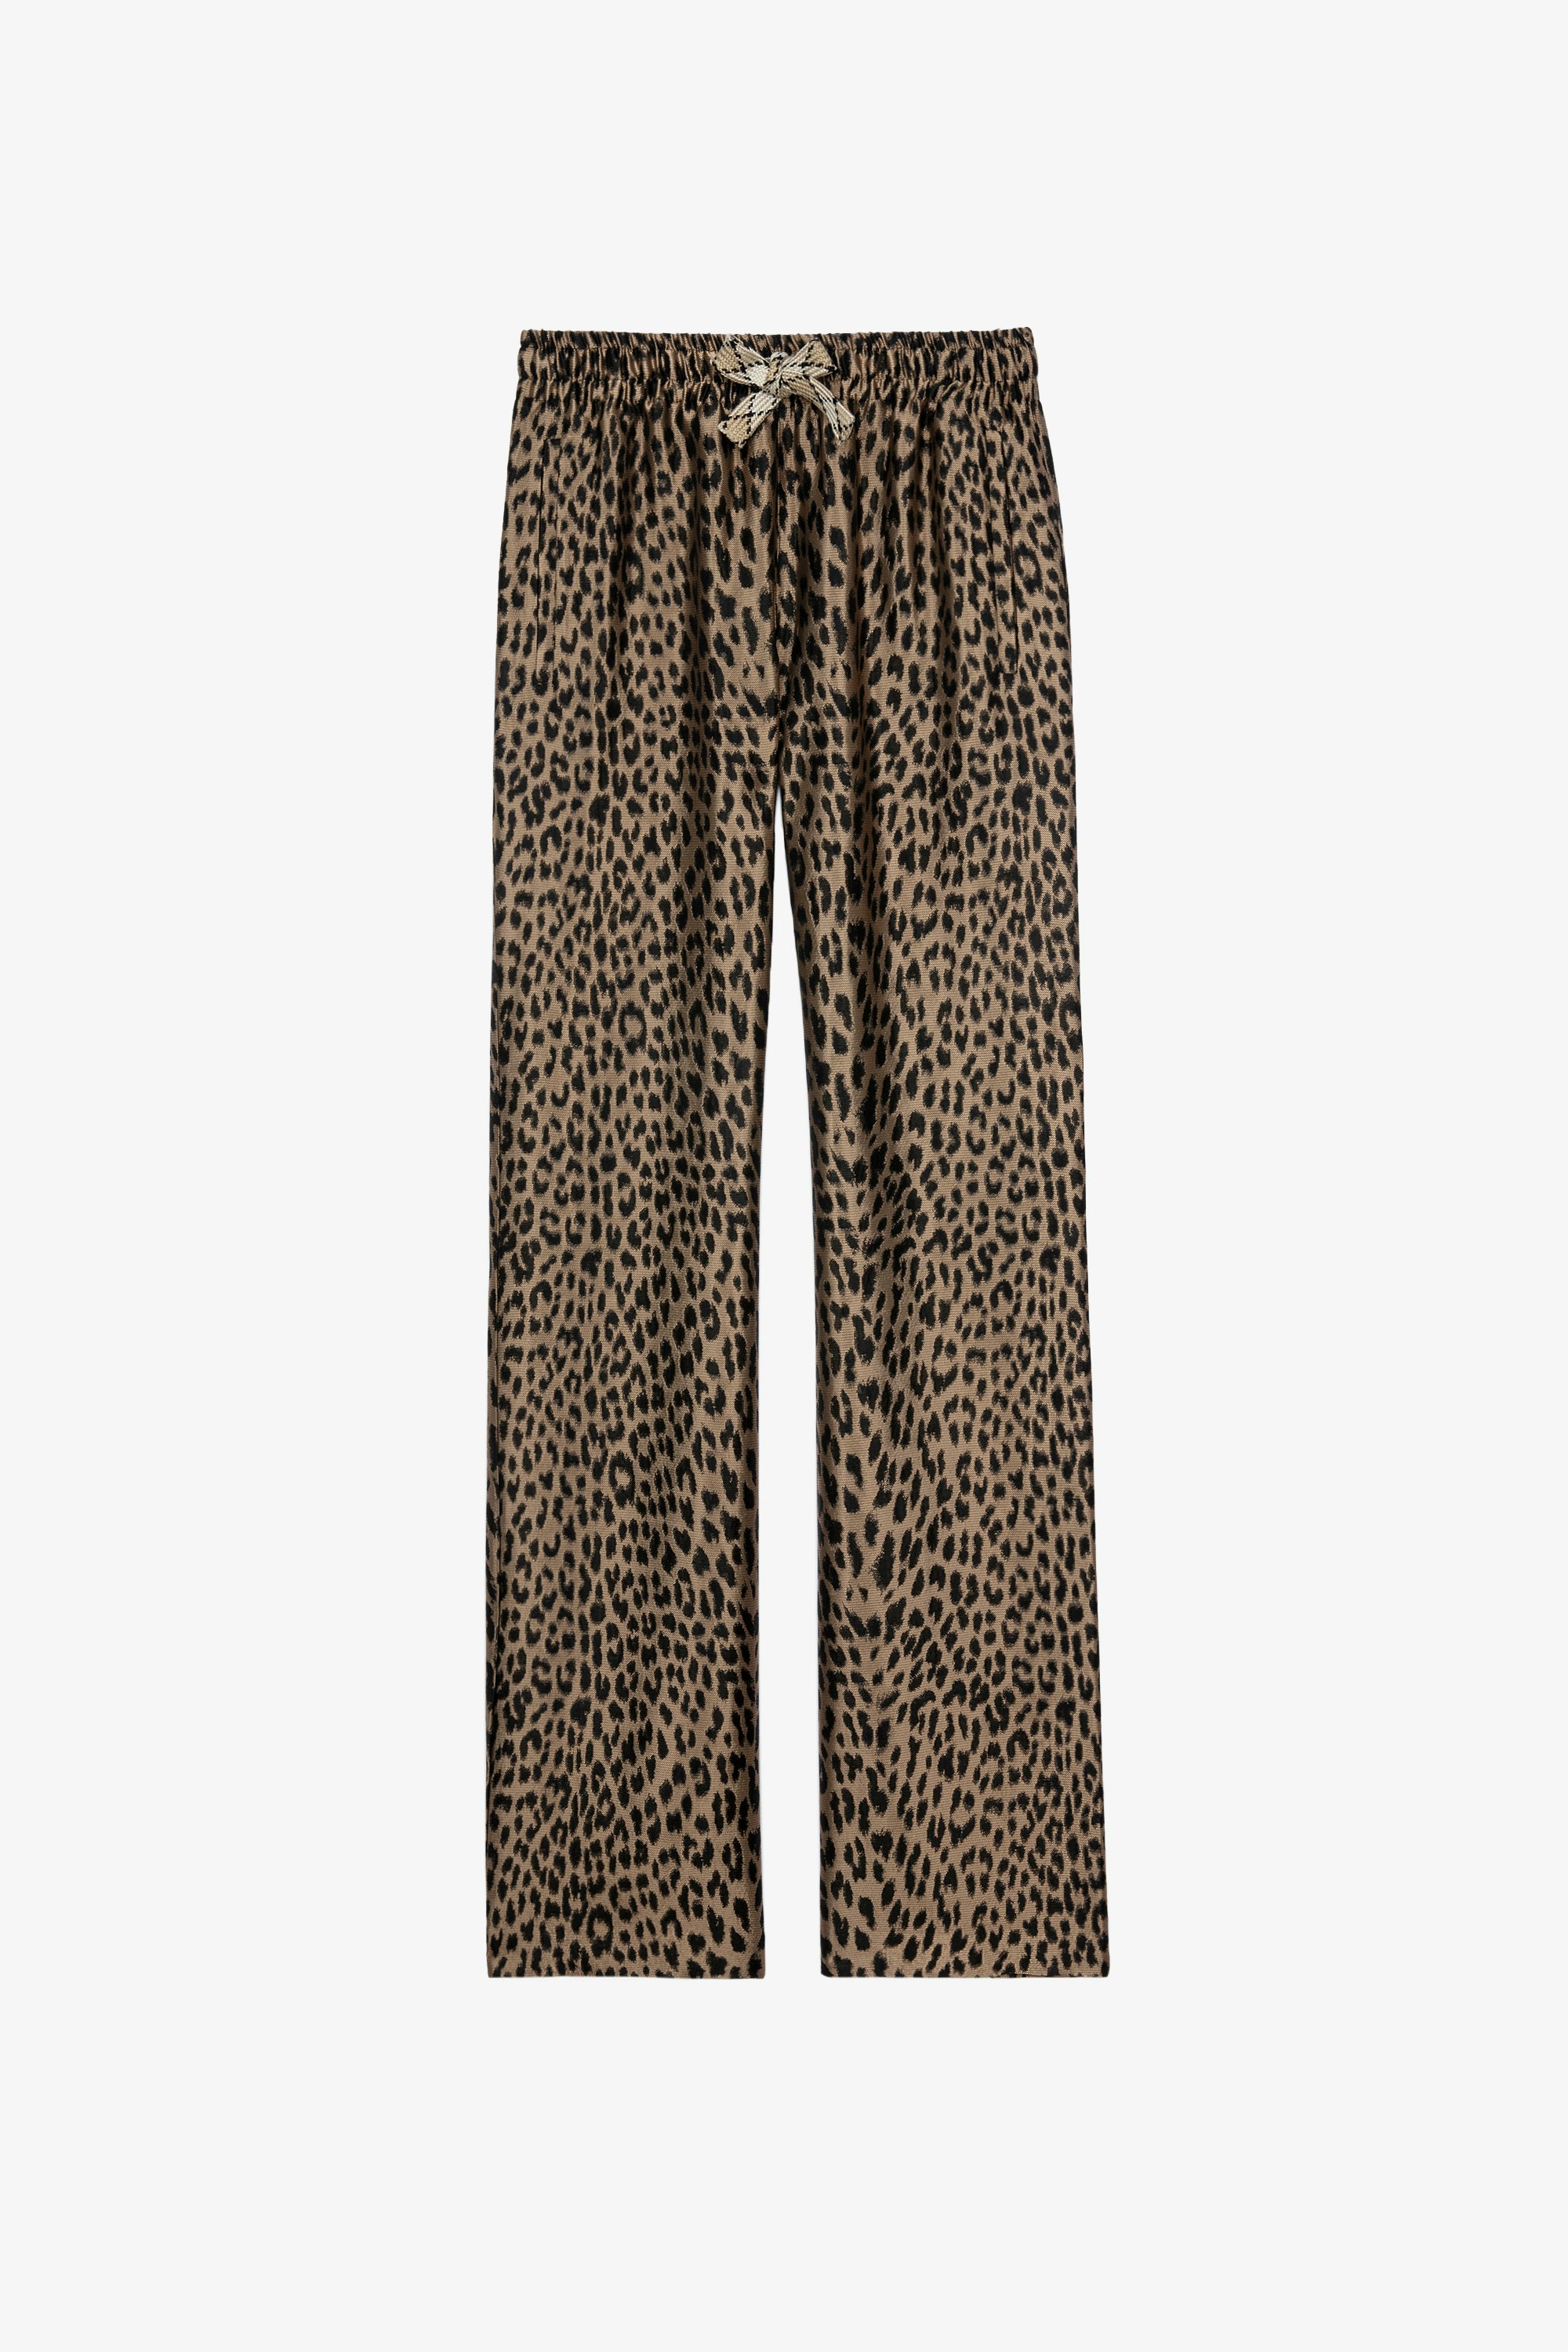 Pomy Jac Leo Trousers Women's Naturel trousers in leopard-print jacquard